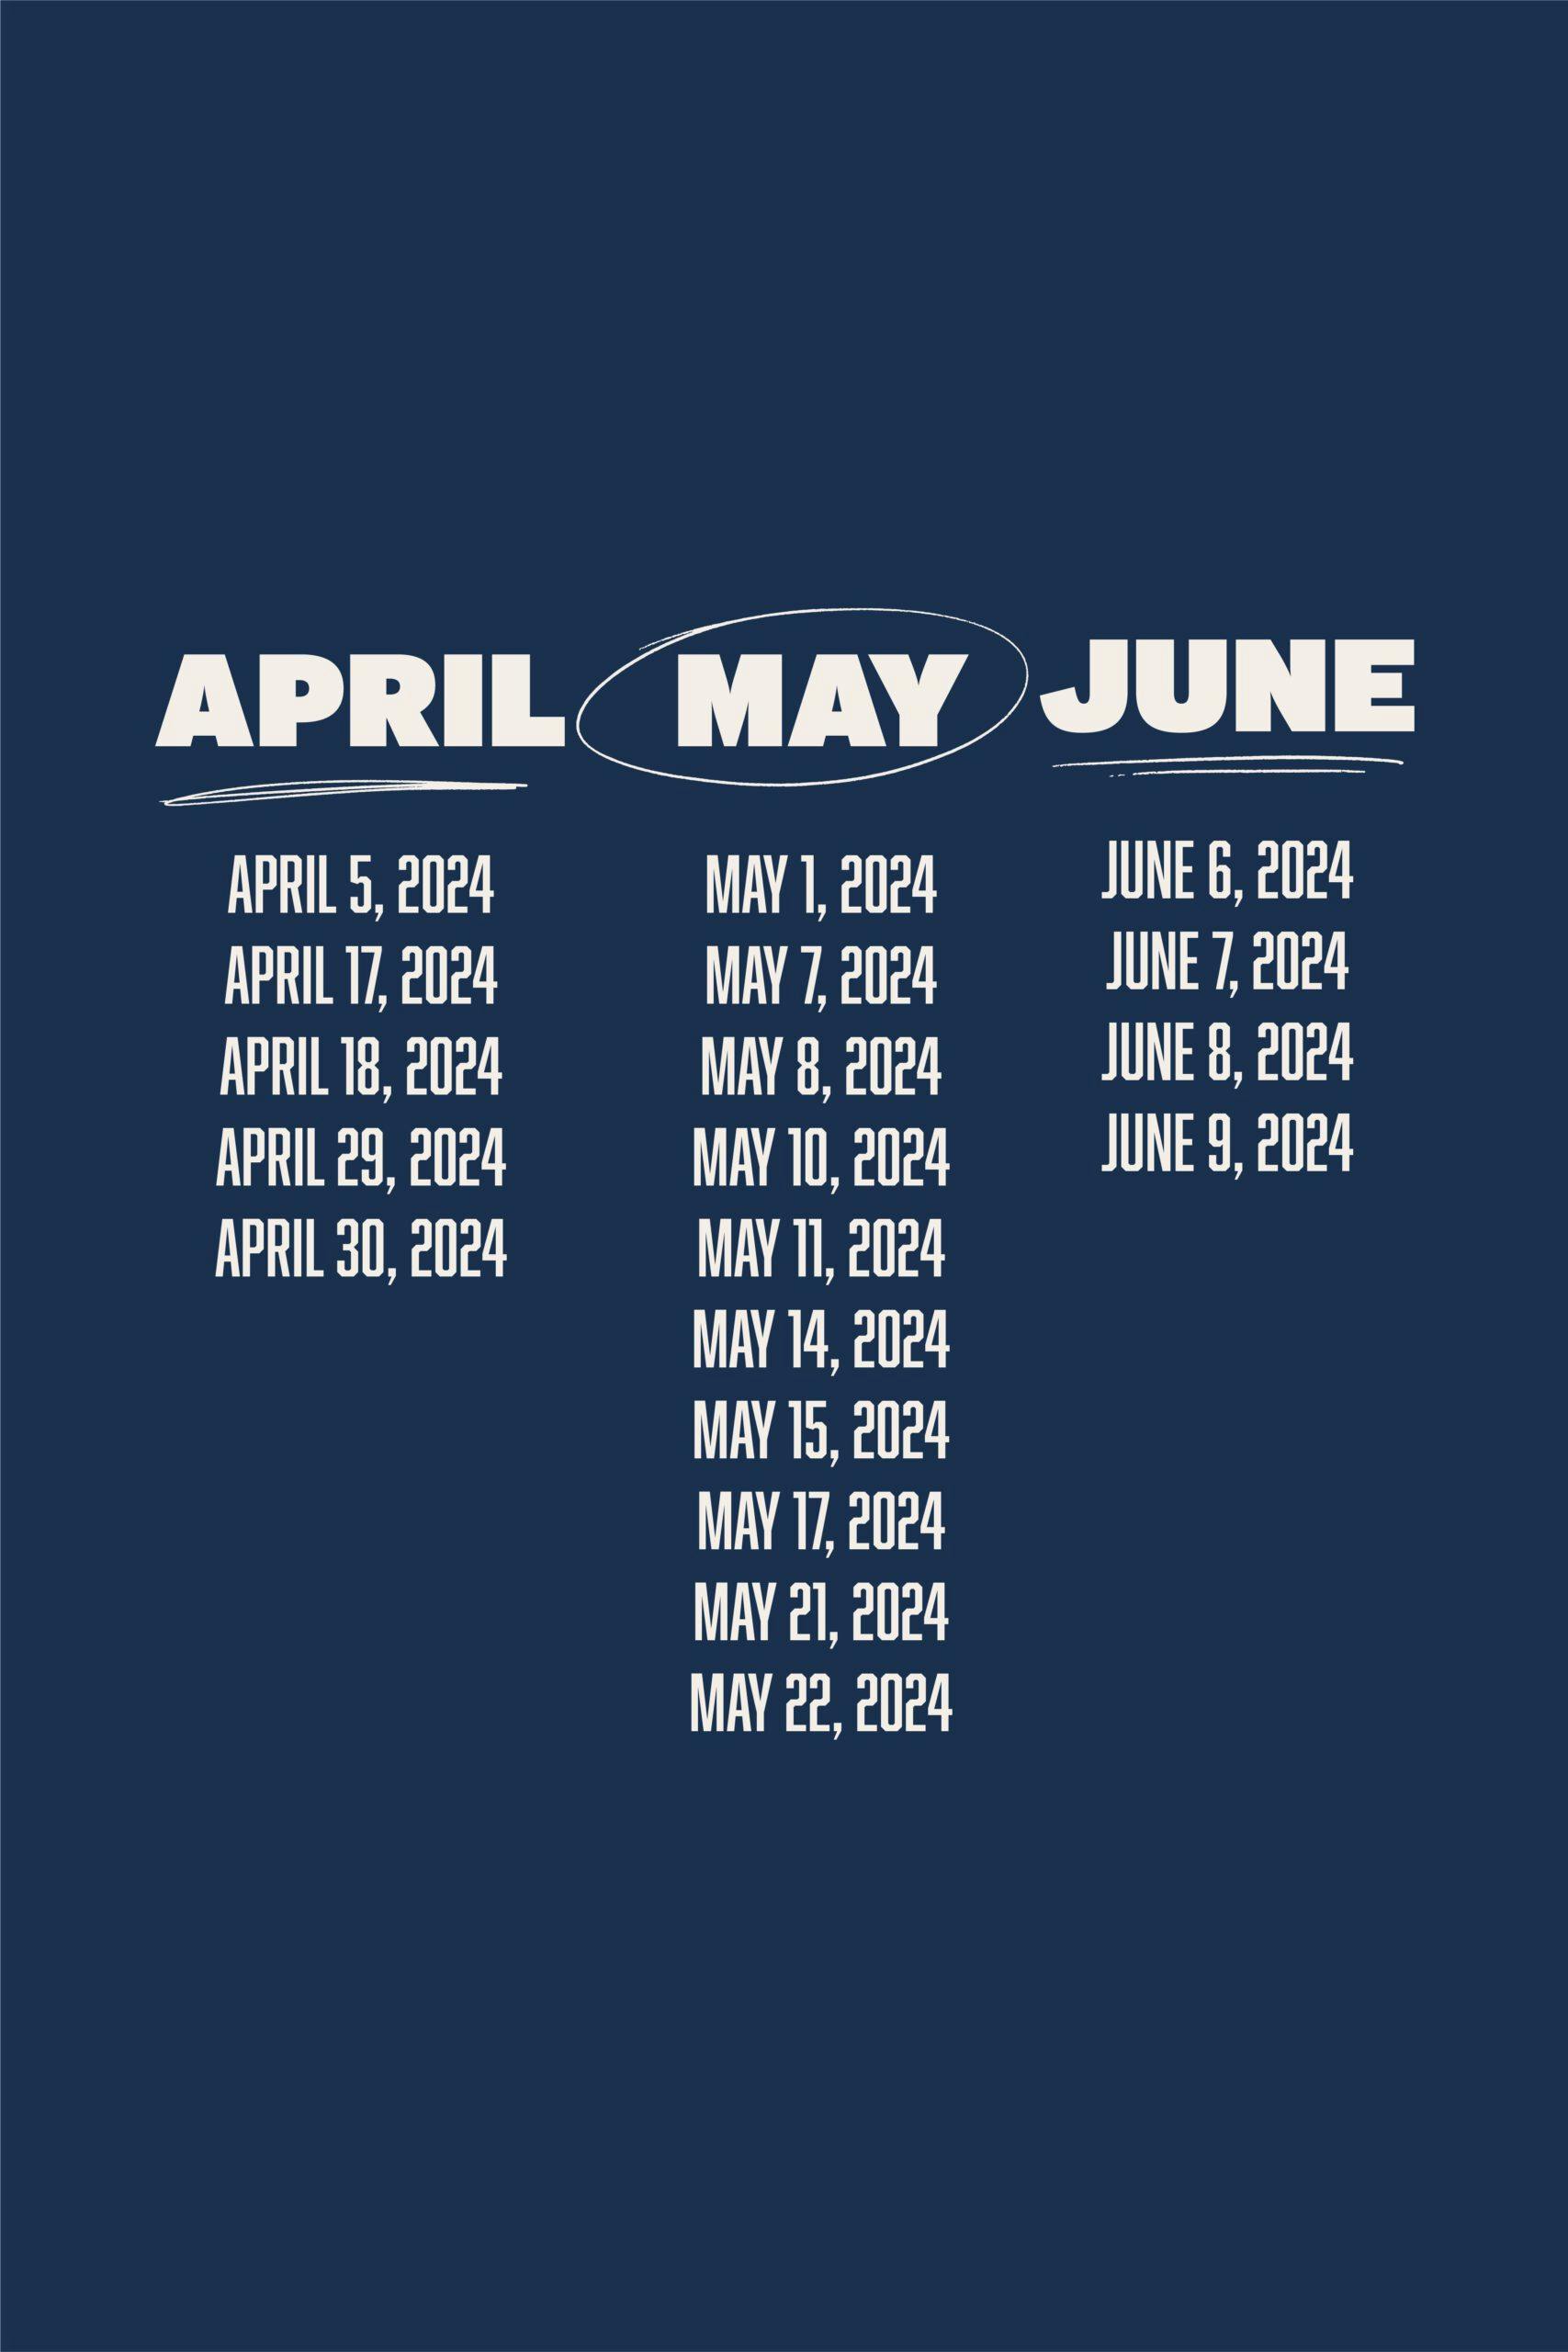 Residency Dates